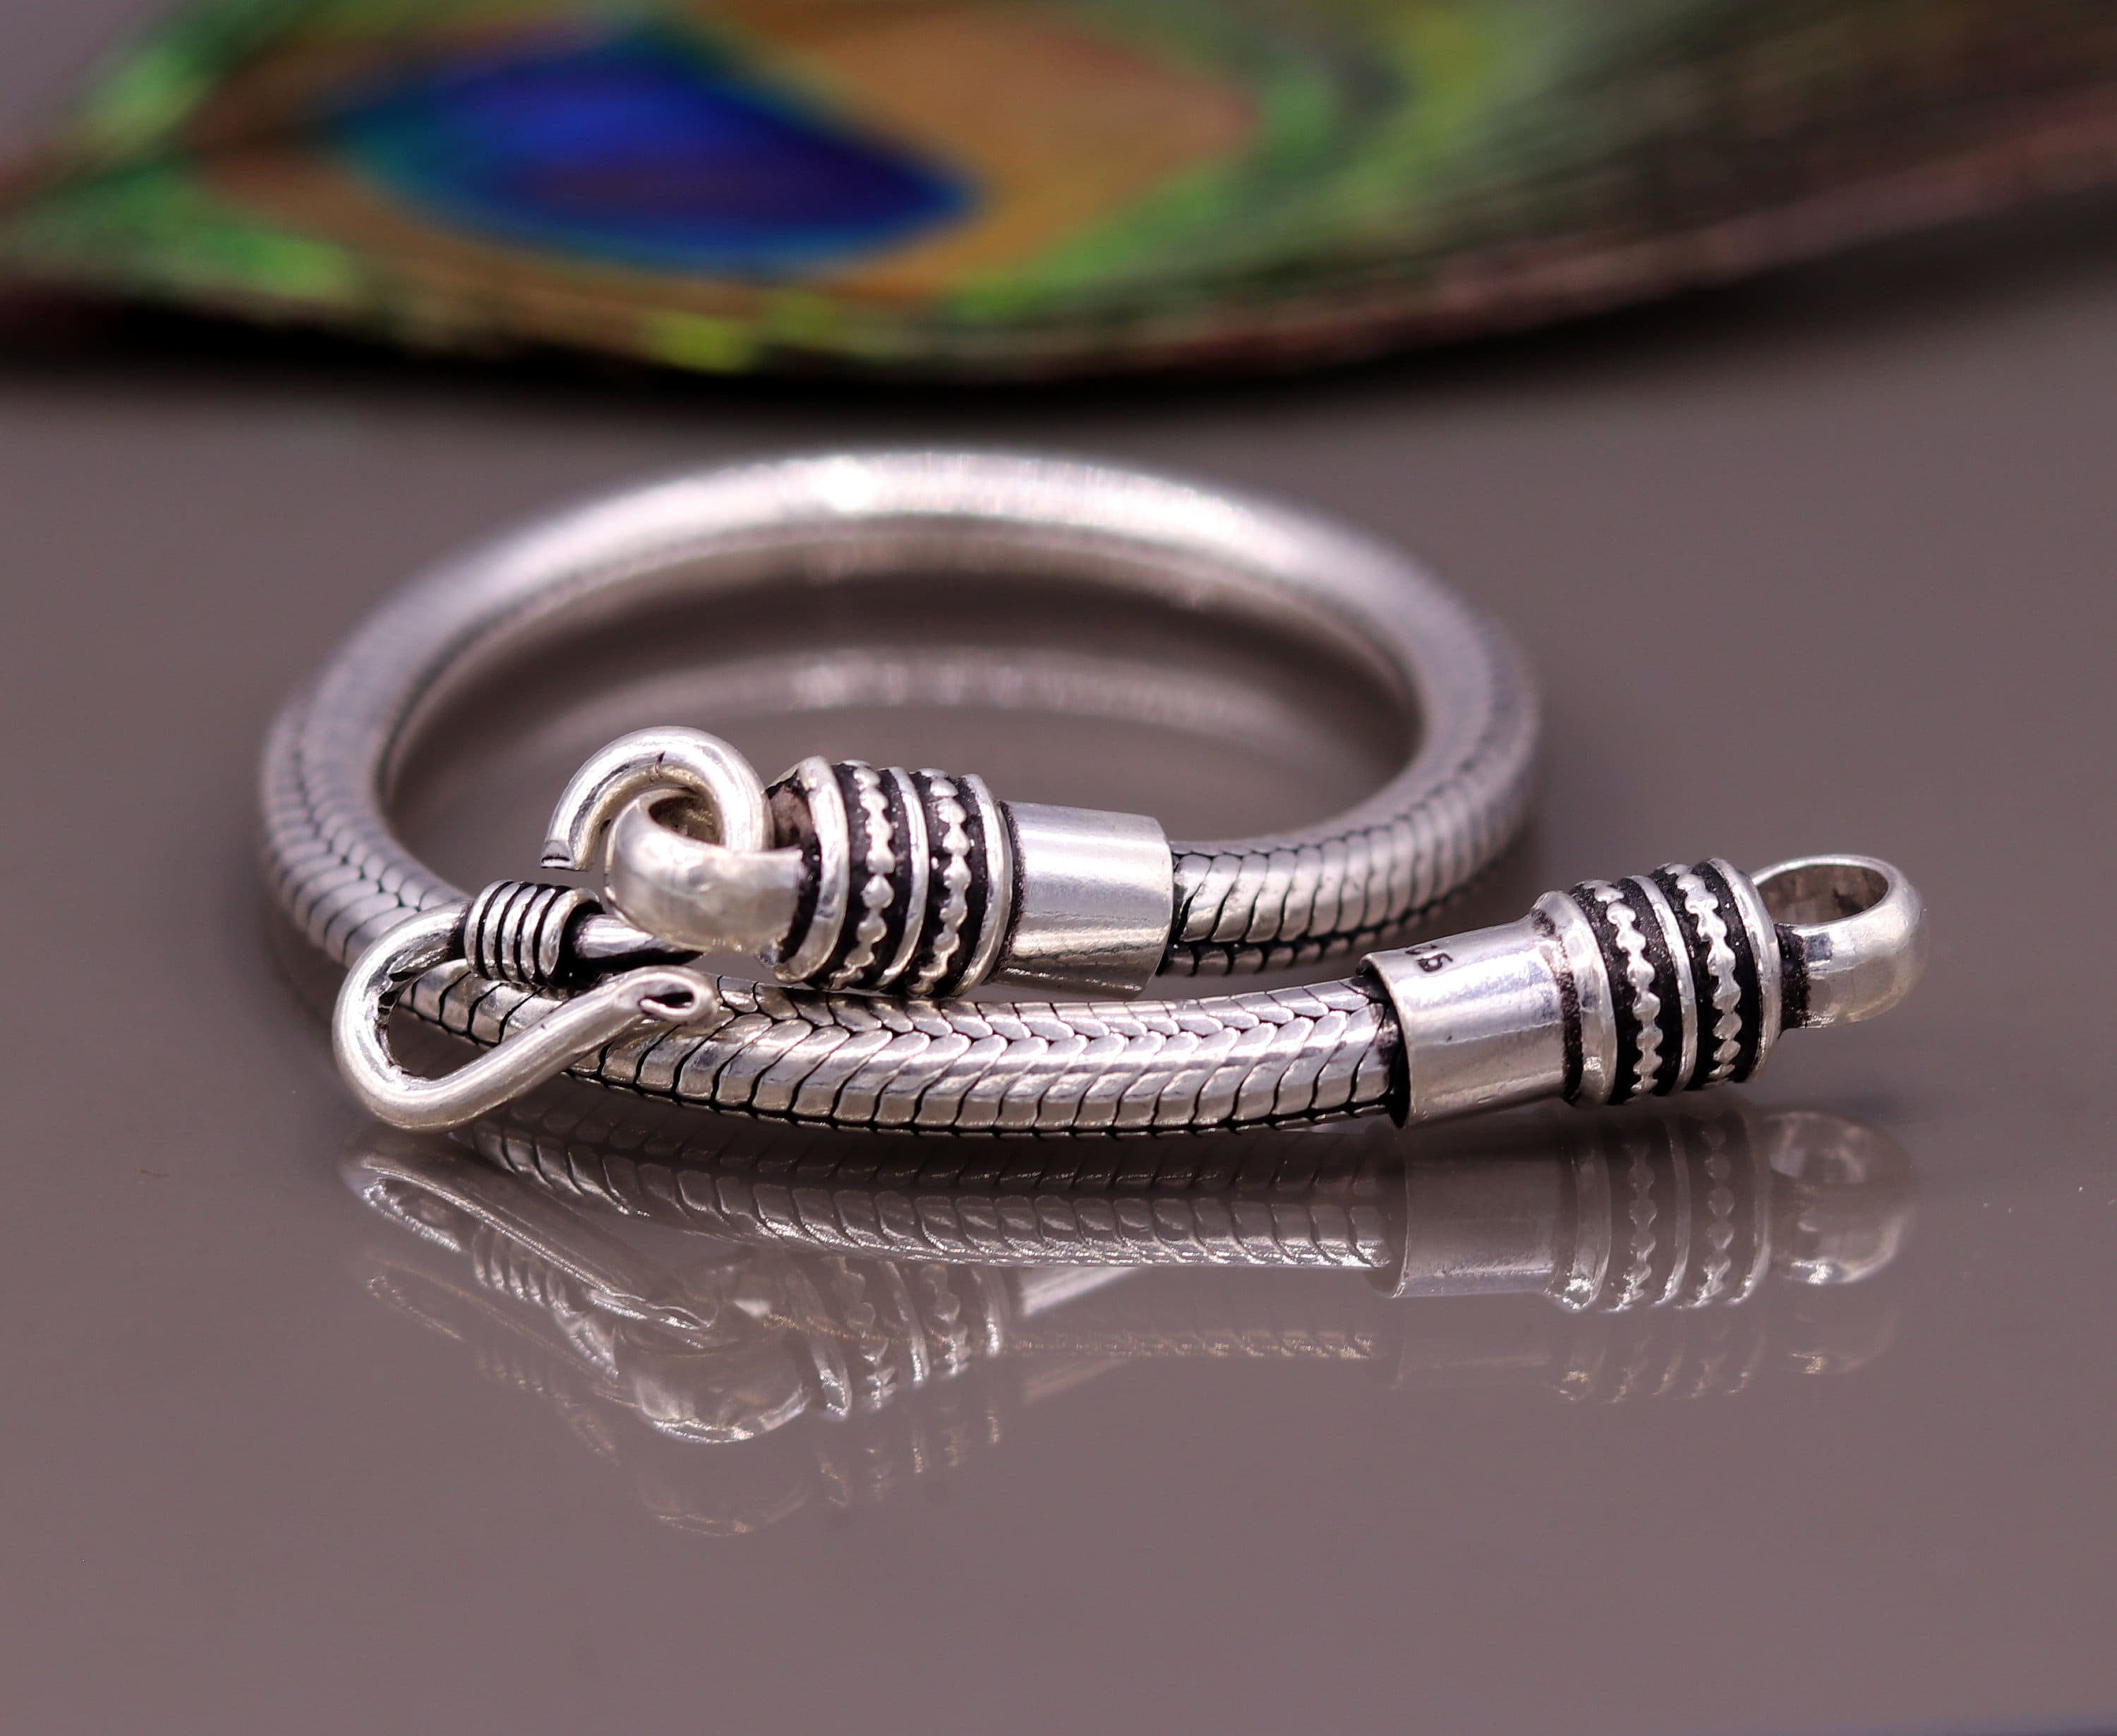 Ouroboros bracelet Silver snake bracelet Beaded jewelry - Inspire Uplift